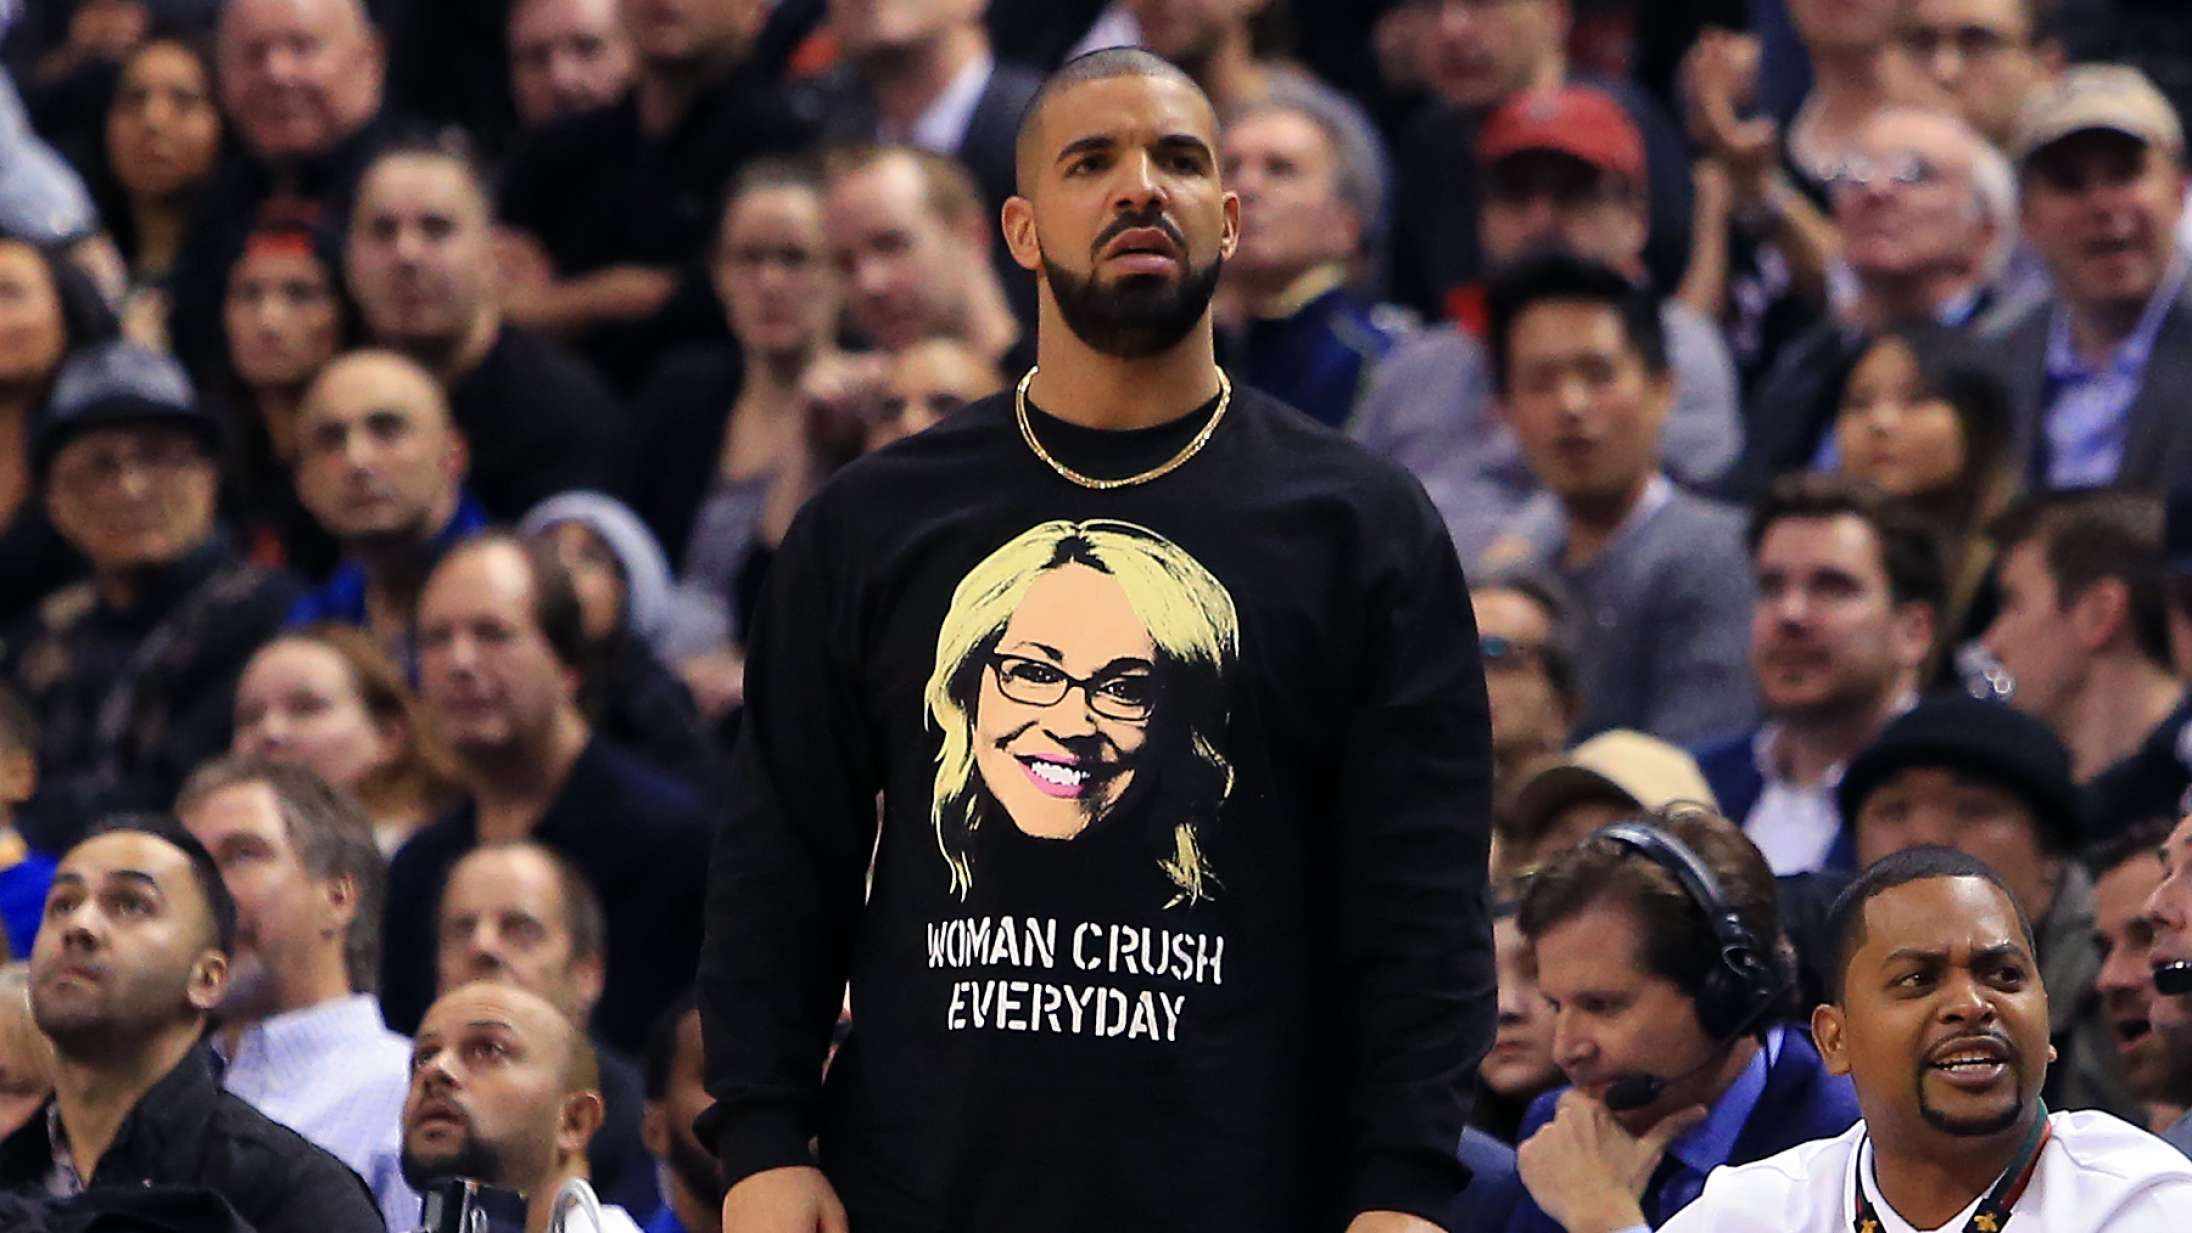 Drake rygtes at forlade Air Jordan til fordel for Adidas